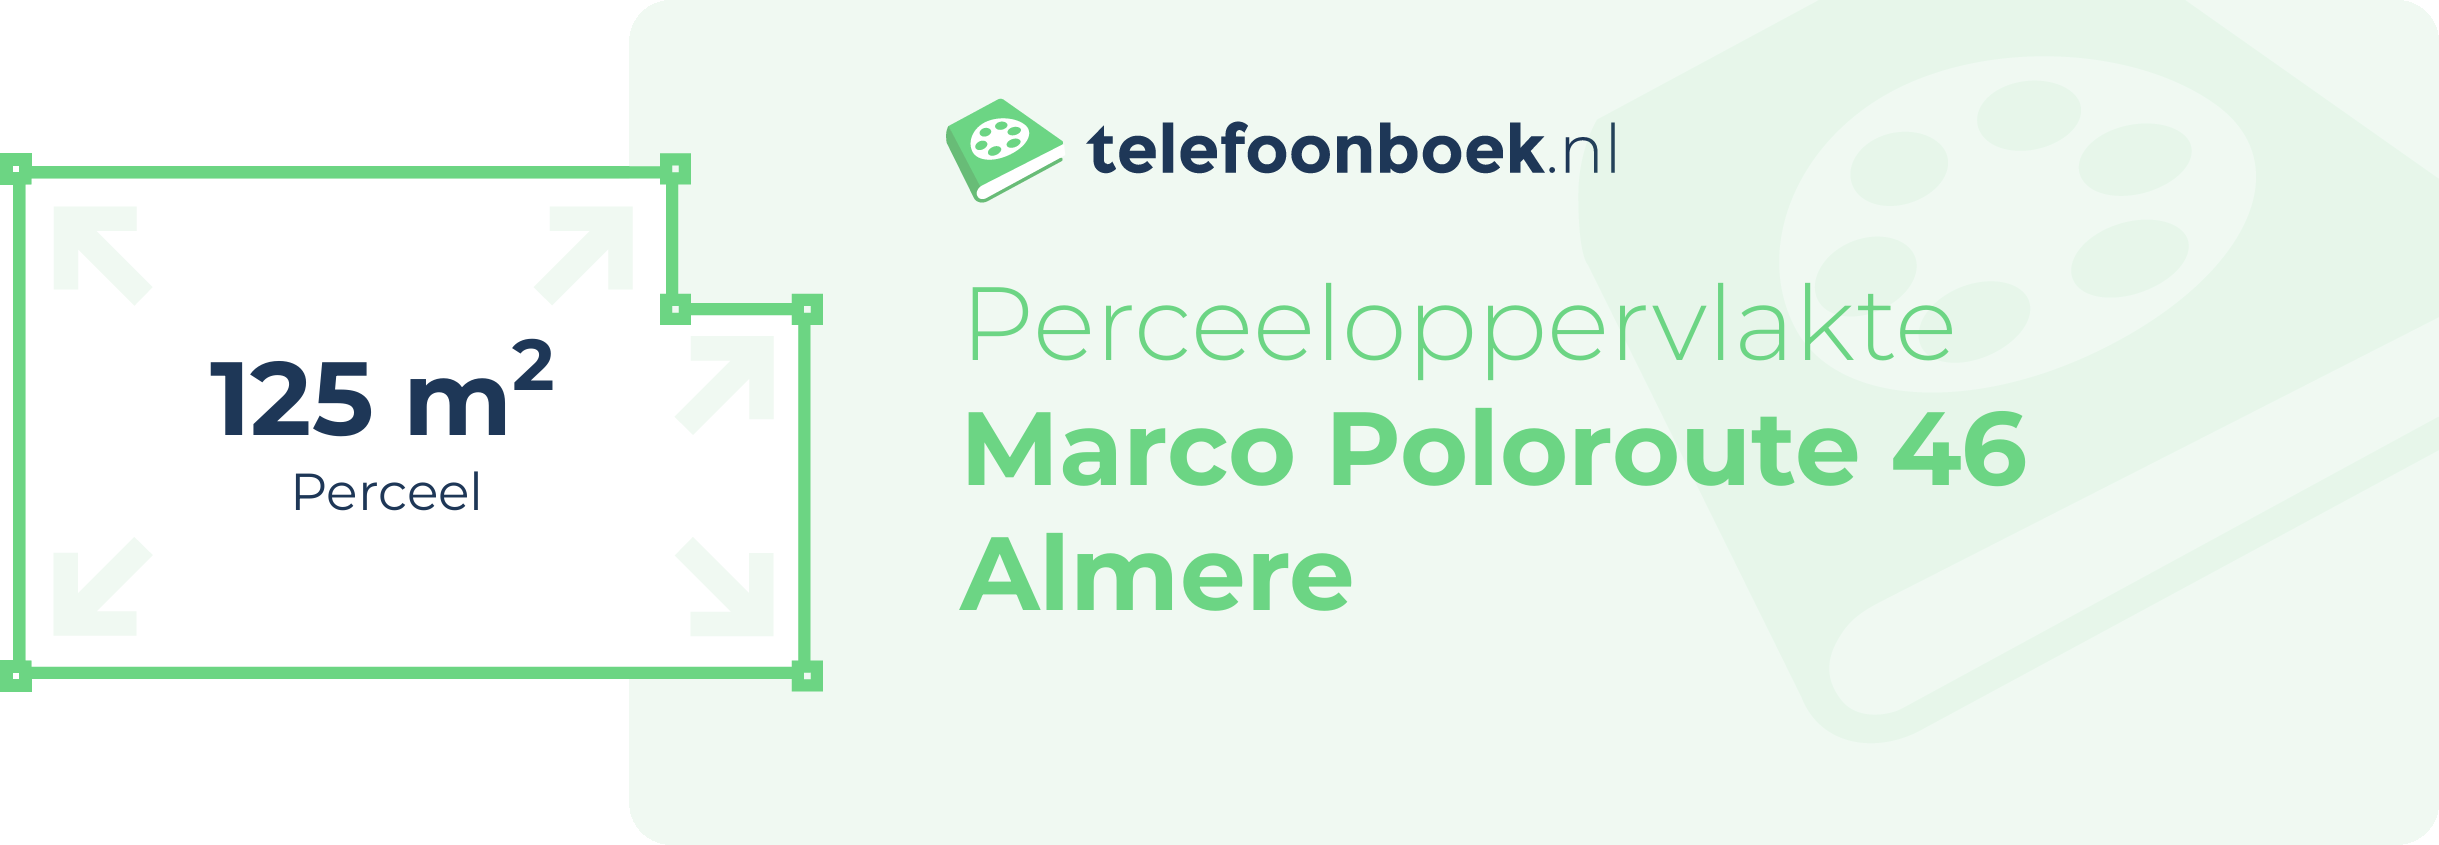 Perceeloppervlakte Marco Poloroute 46 Almere